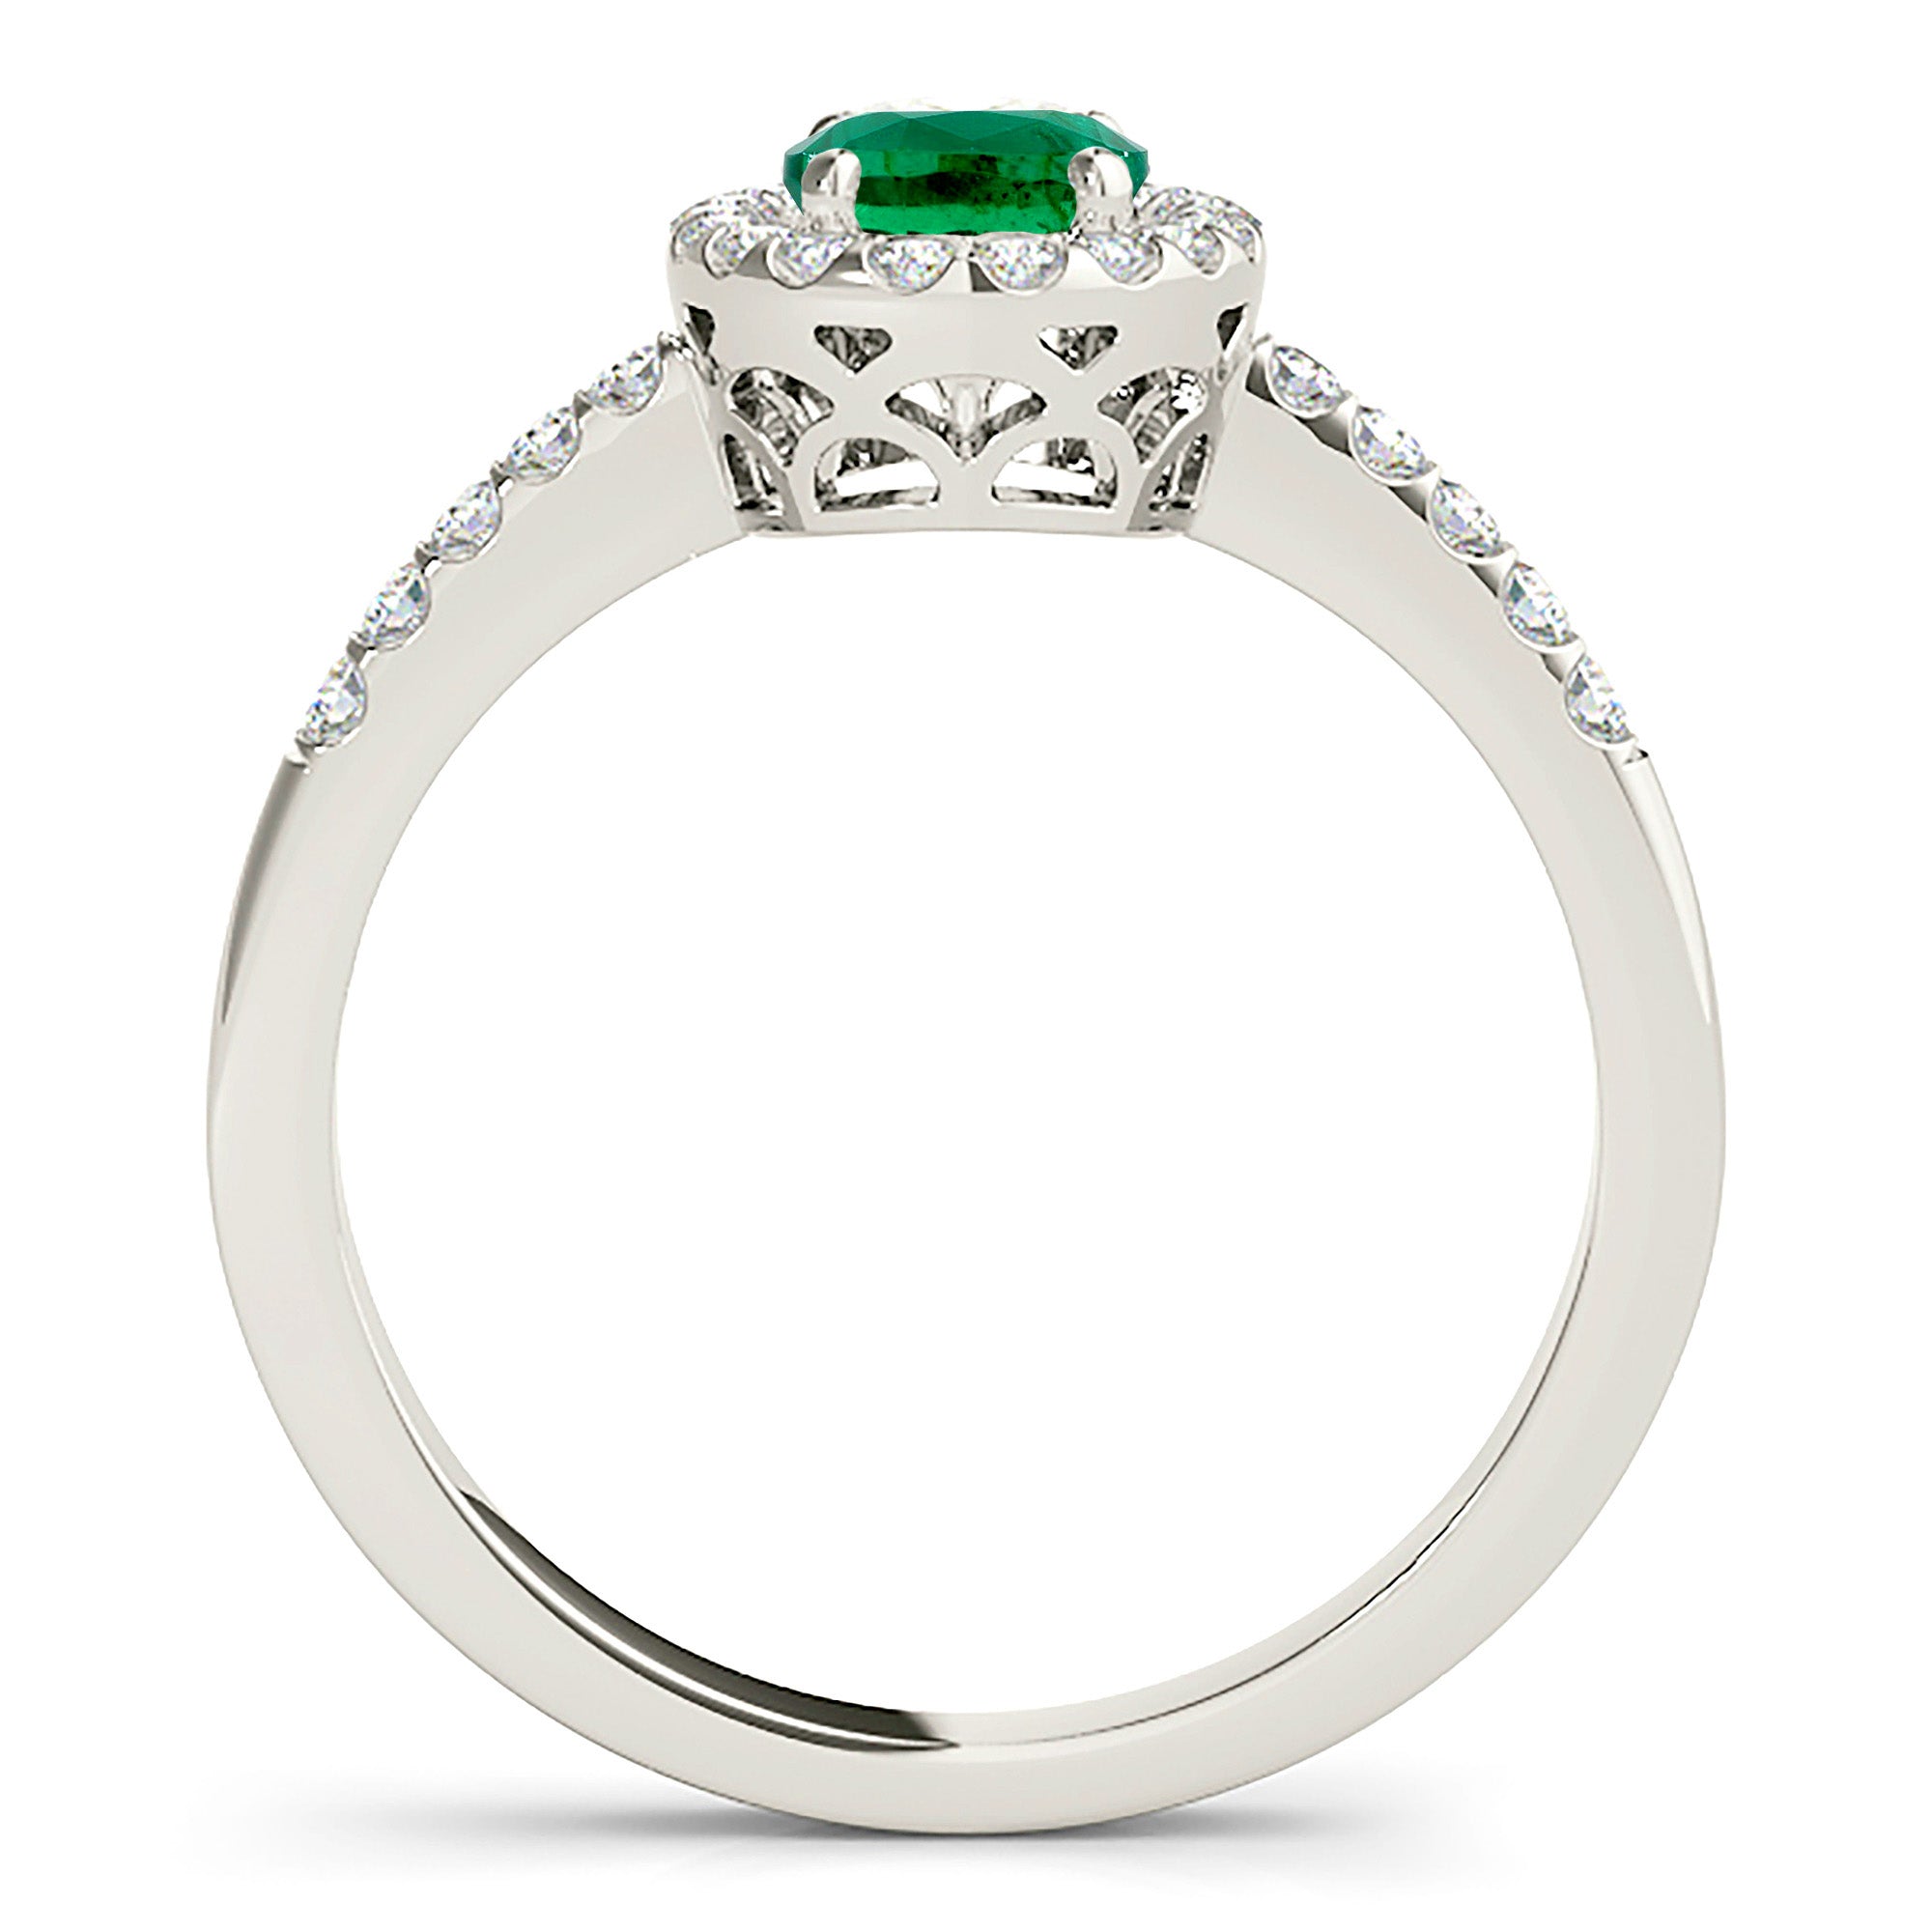 1.30 ct. Genuine Oval Emerald With 0.25 ctw. Diamond Halo, Filigree Basket, Thin Diamond Band-in 14K/18K White, Yellow, Rose Gold and Platinum - Christmas Jewelry Gift -VIRABYANI